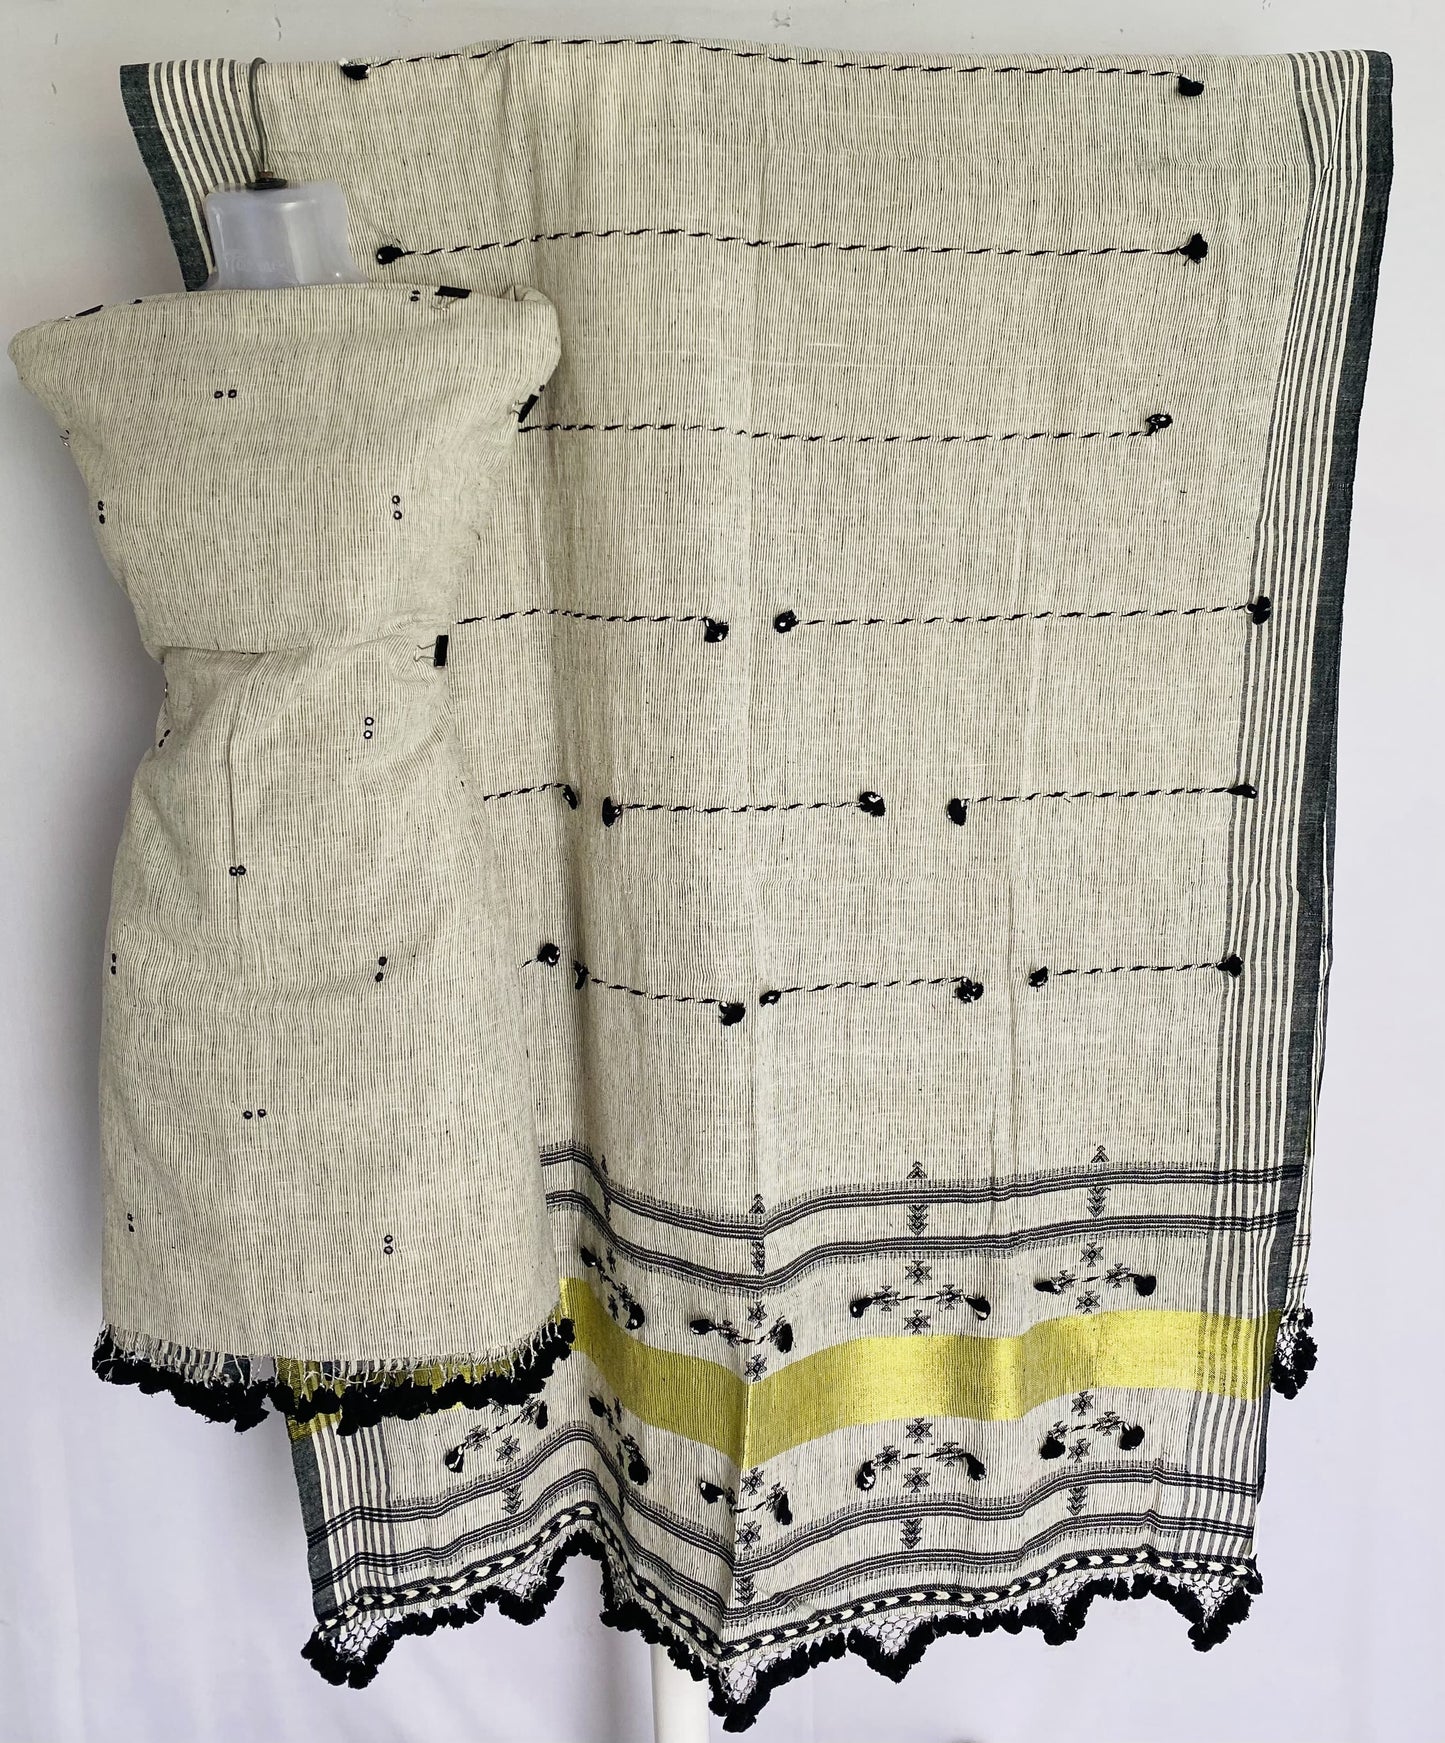 Bhujodi Kala Cotton Suit Material